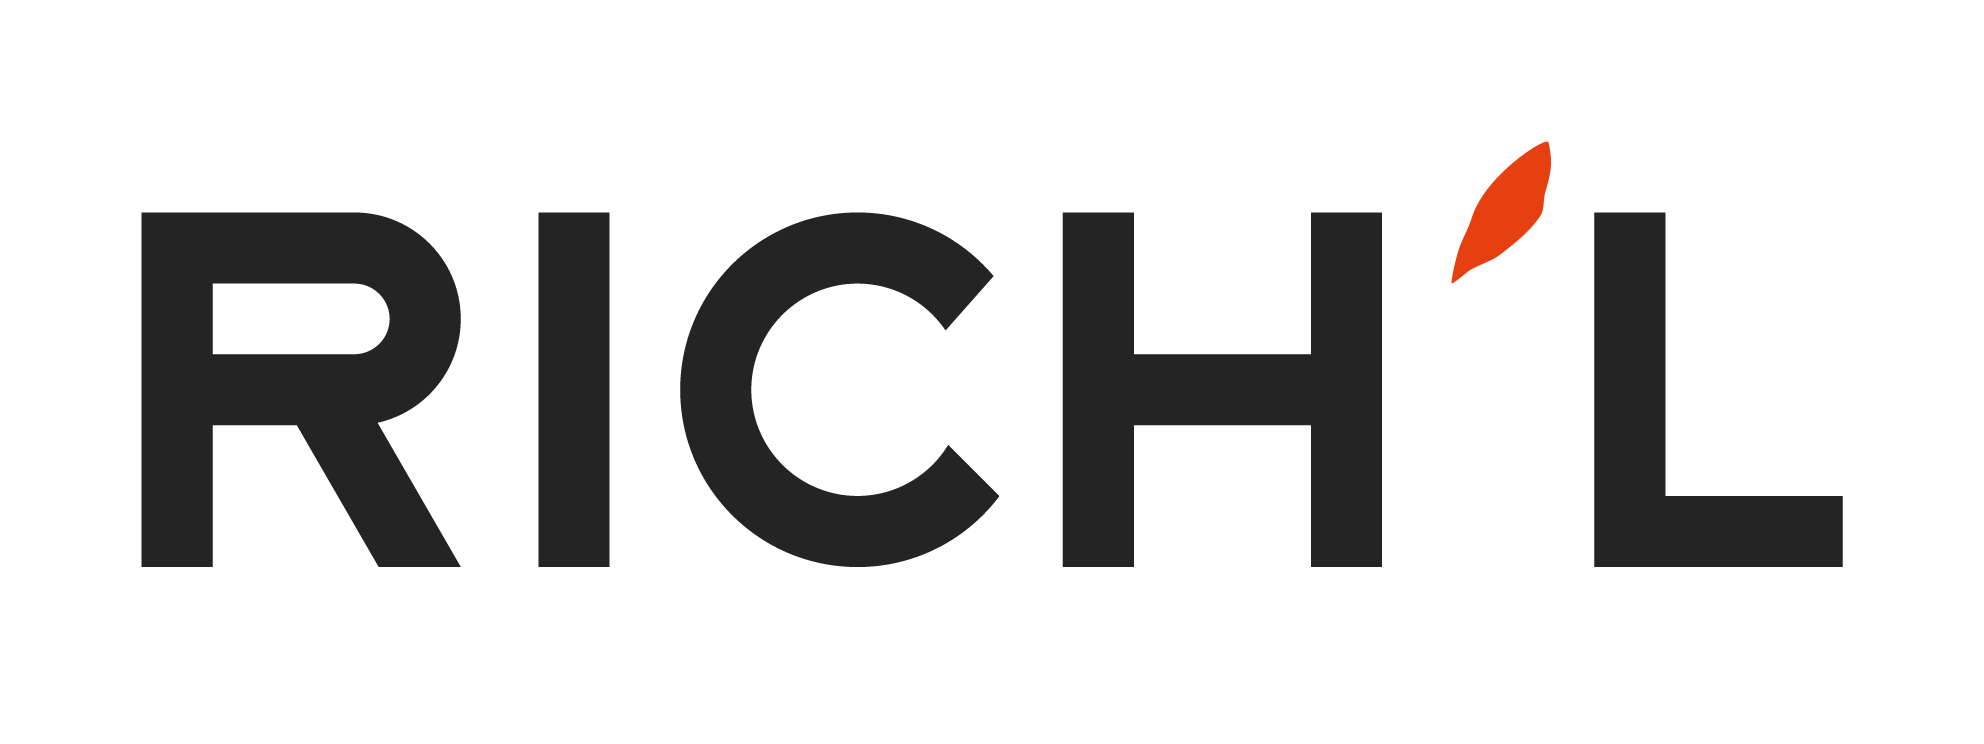 Richl logo